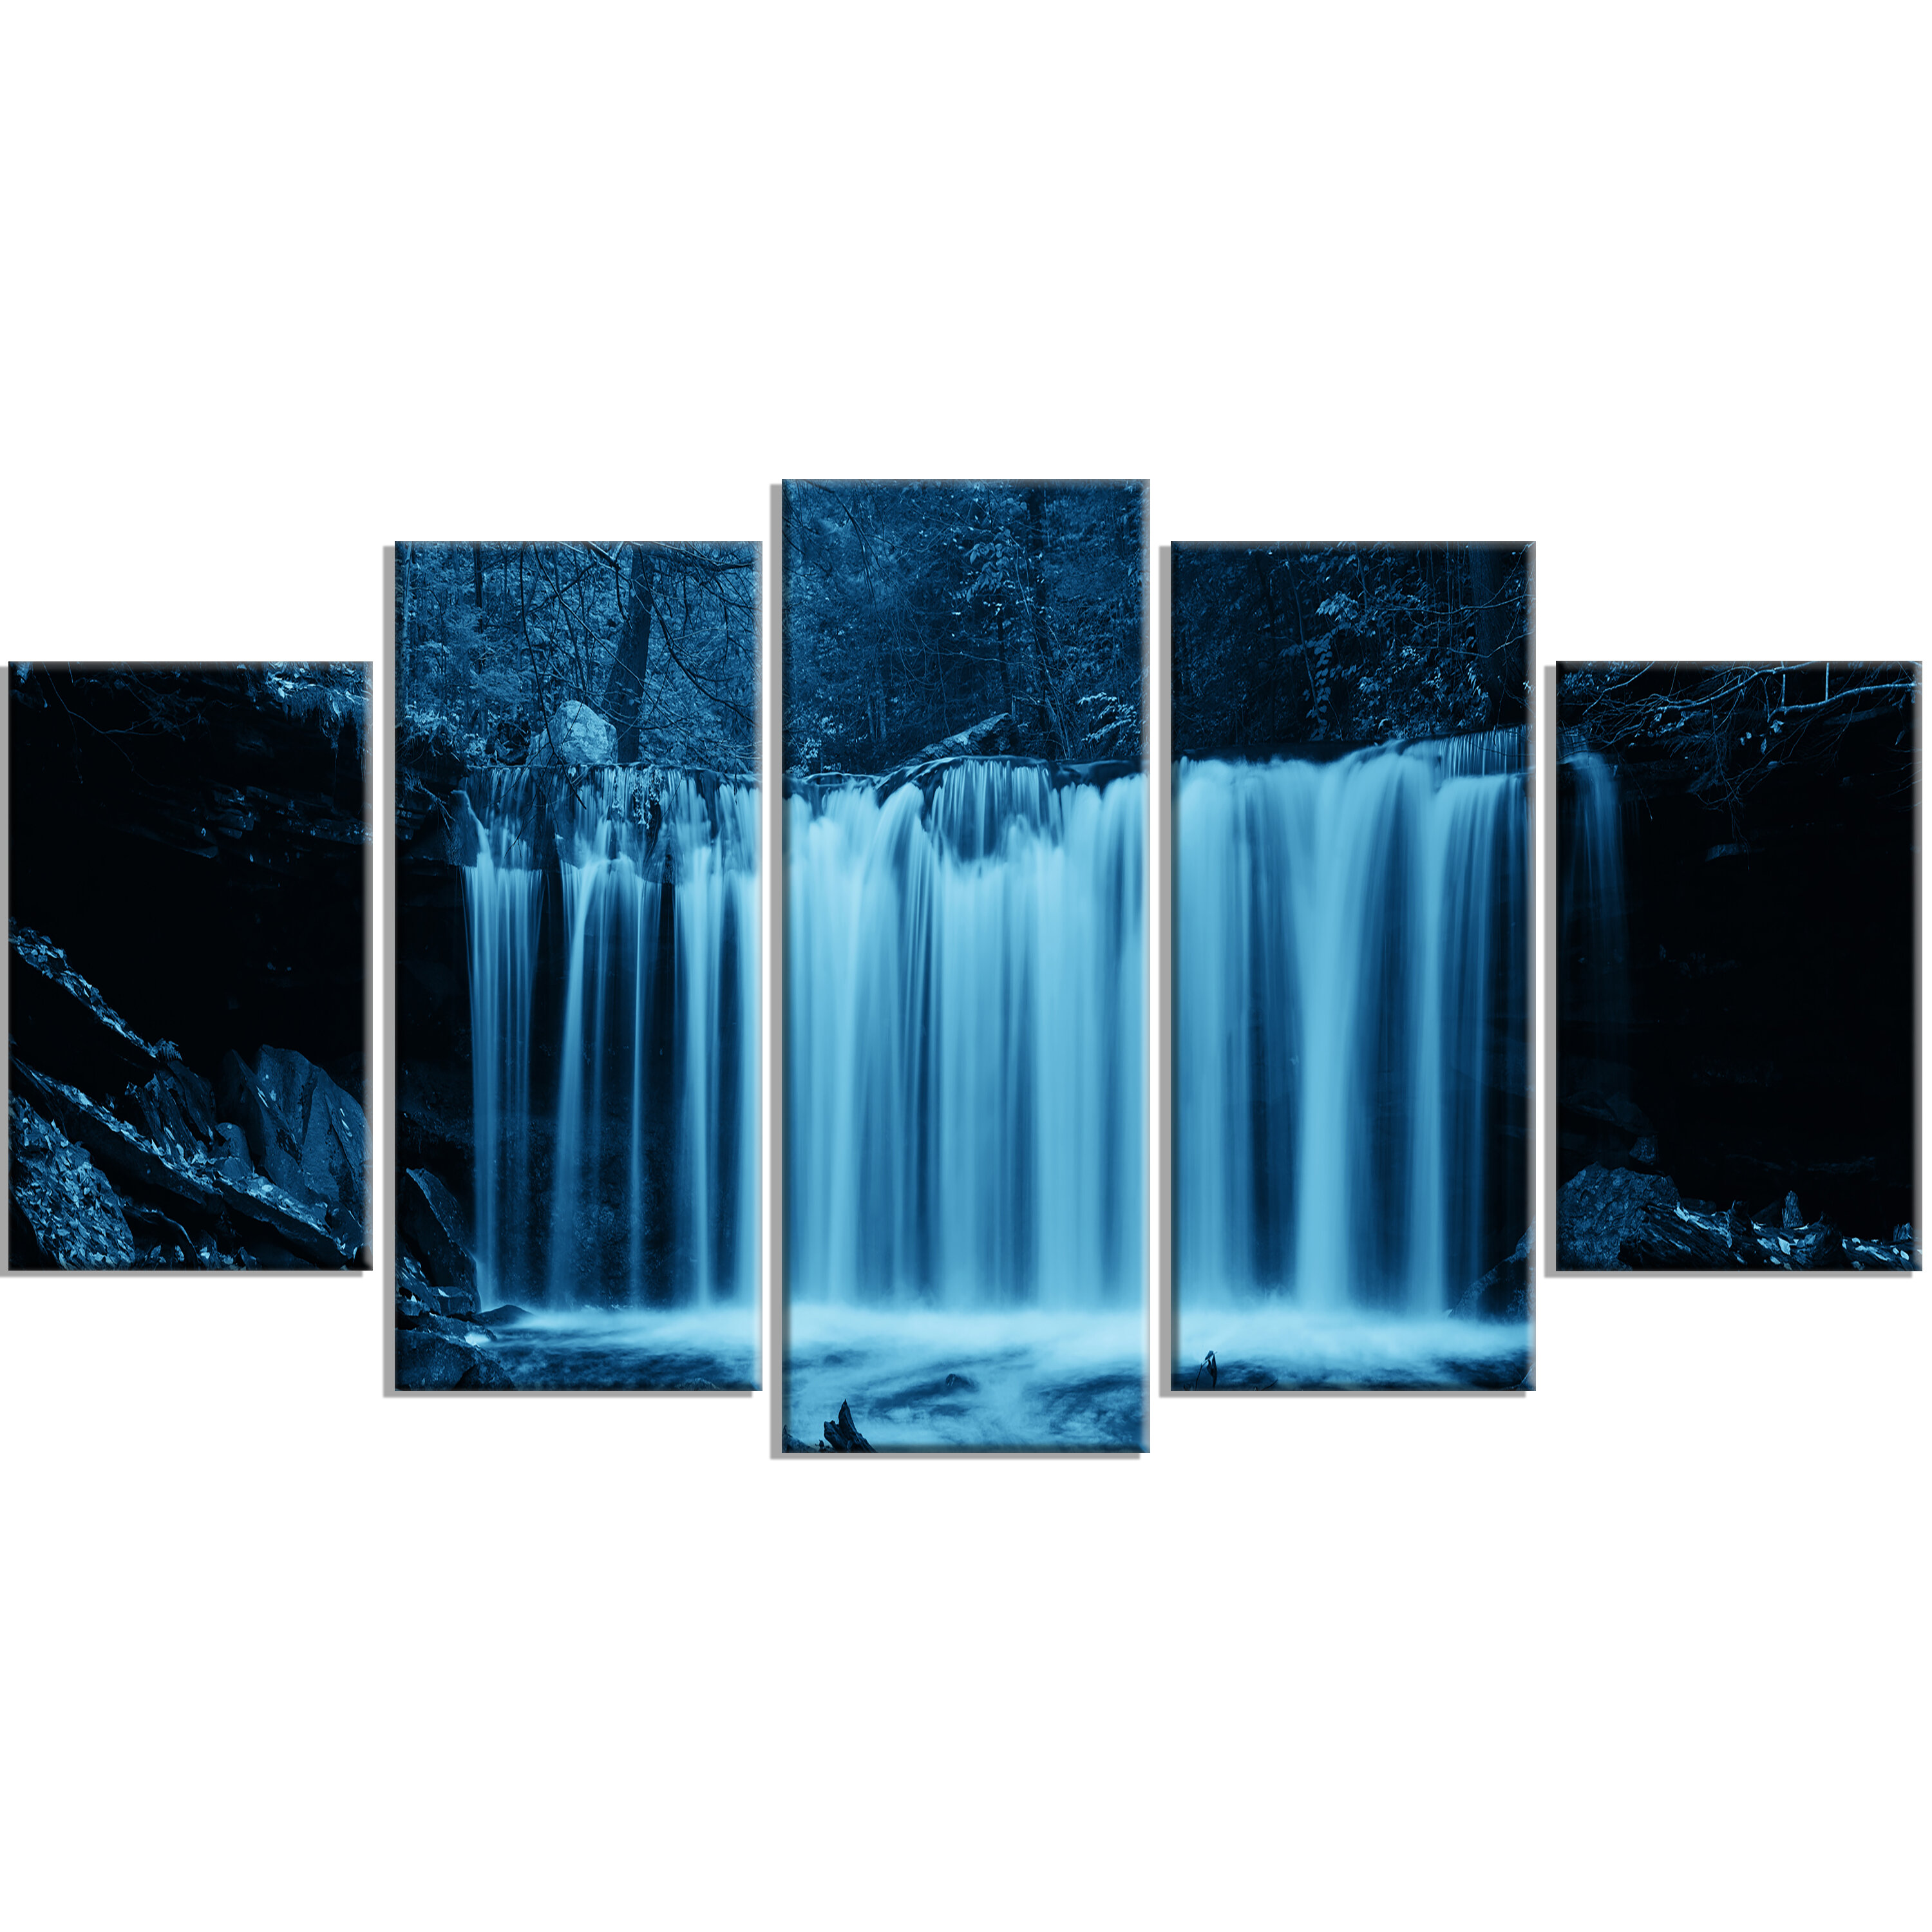 Designart Waterfalls In Wood 5 Piece Wall Art On Wrapped Canvas Set In Black White Wayfair